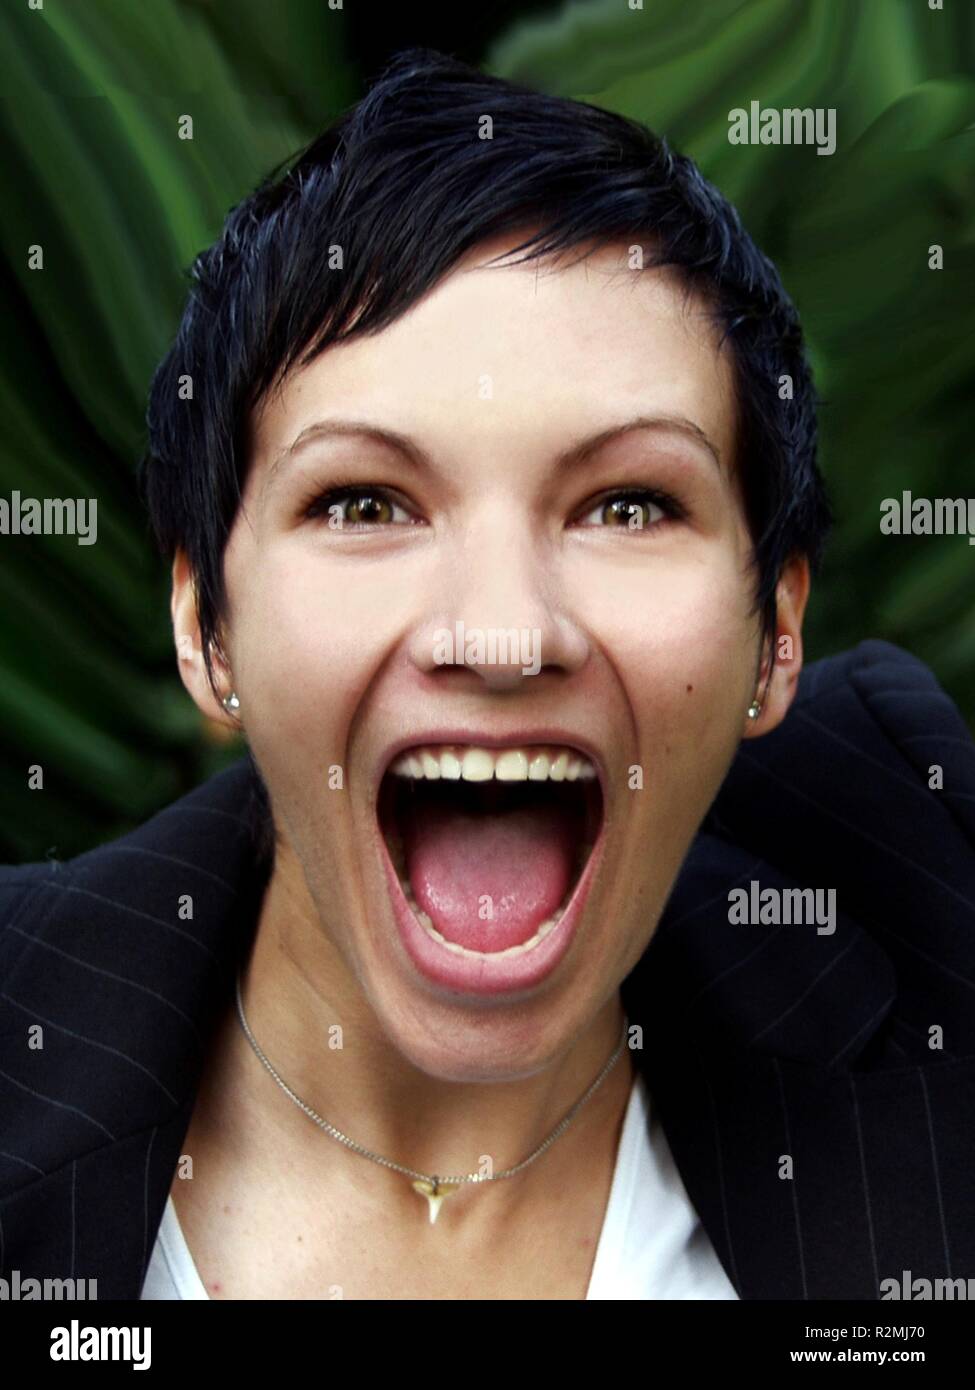 scream of joy Stock Photo - Alamy